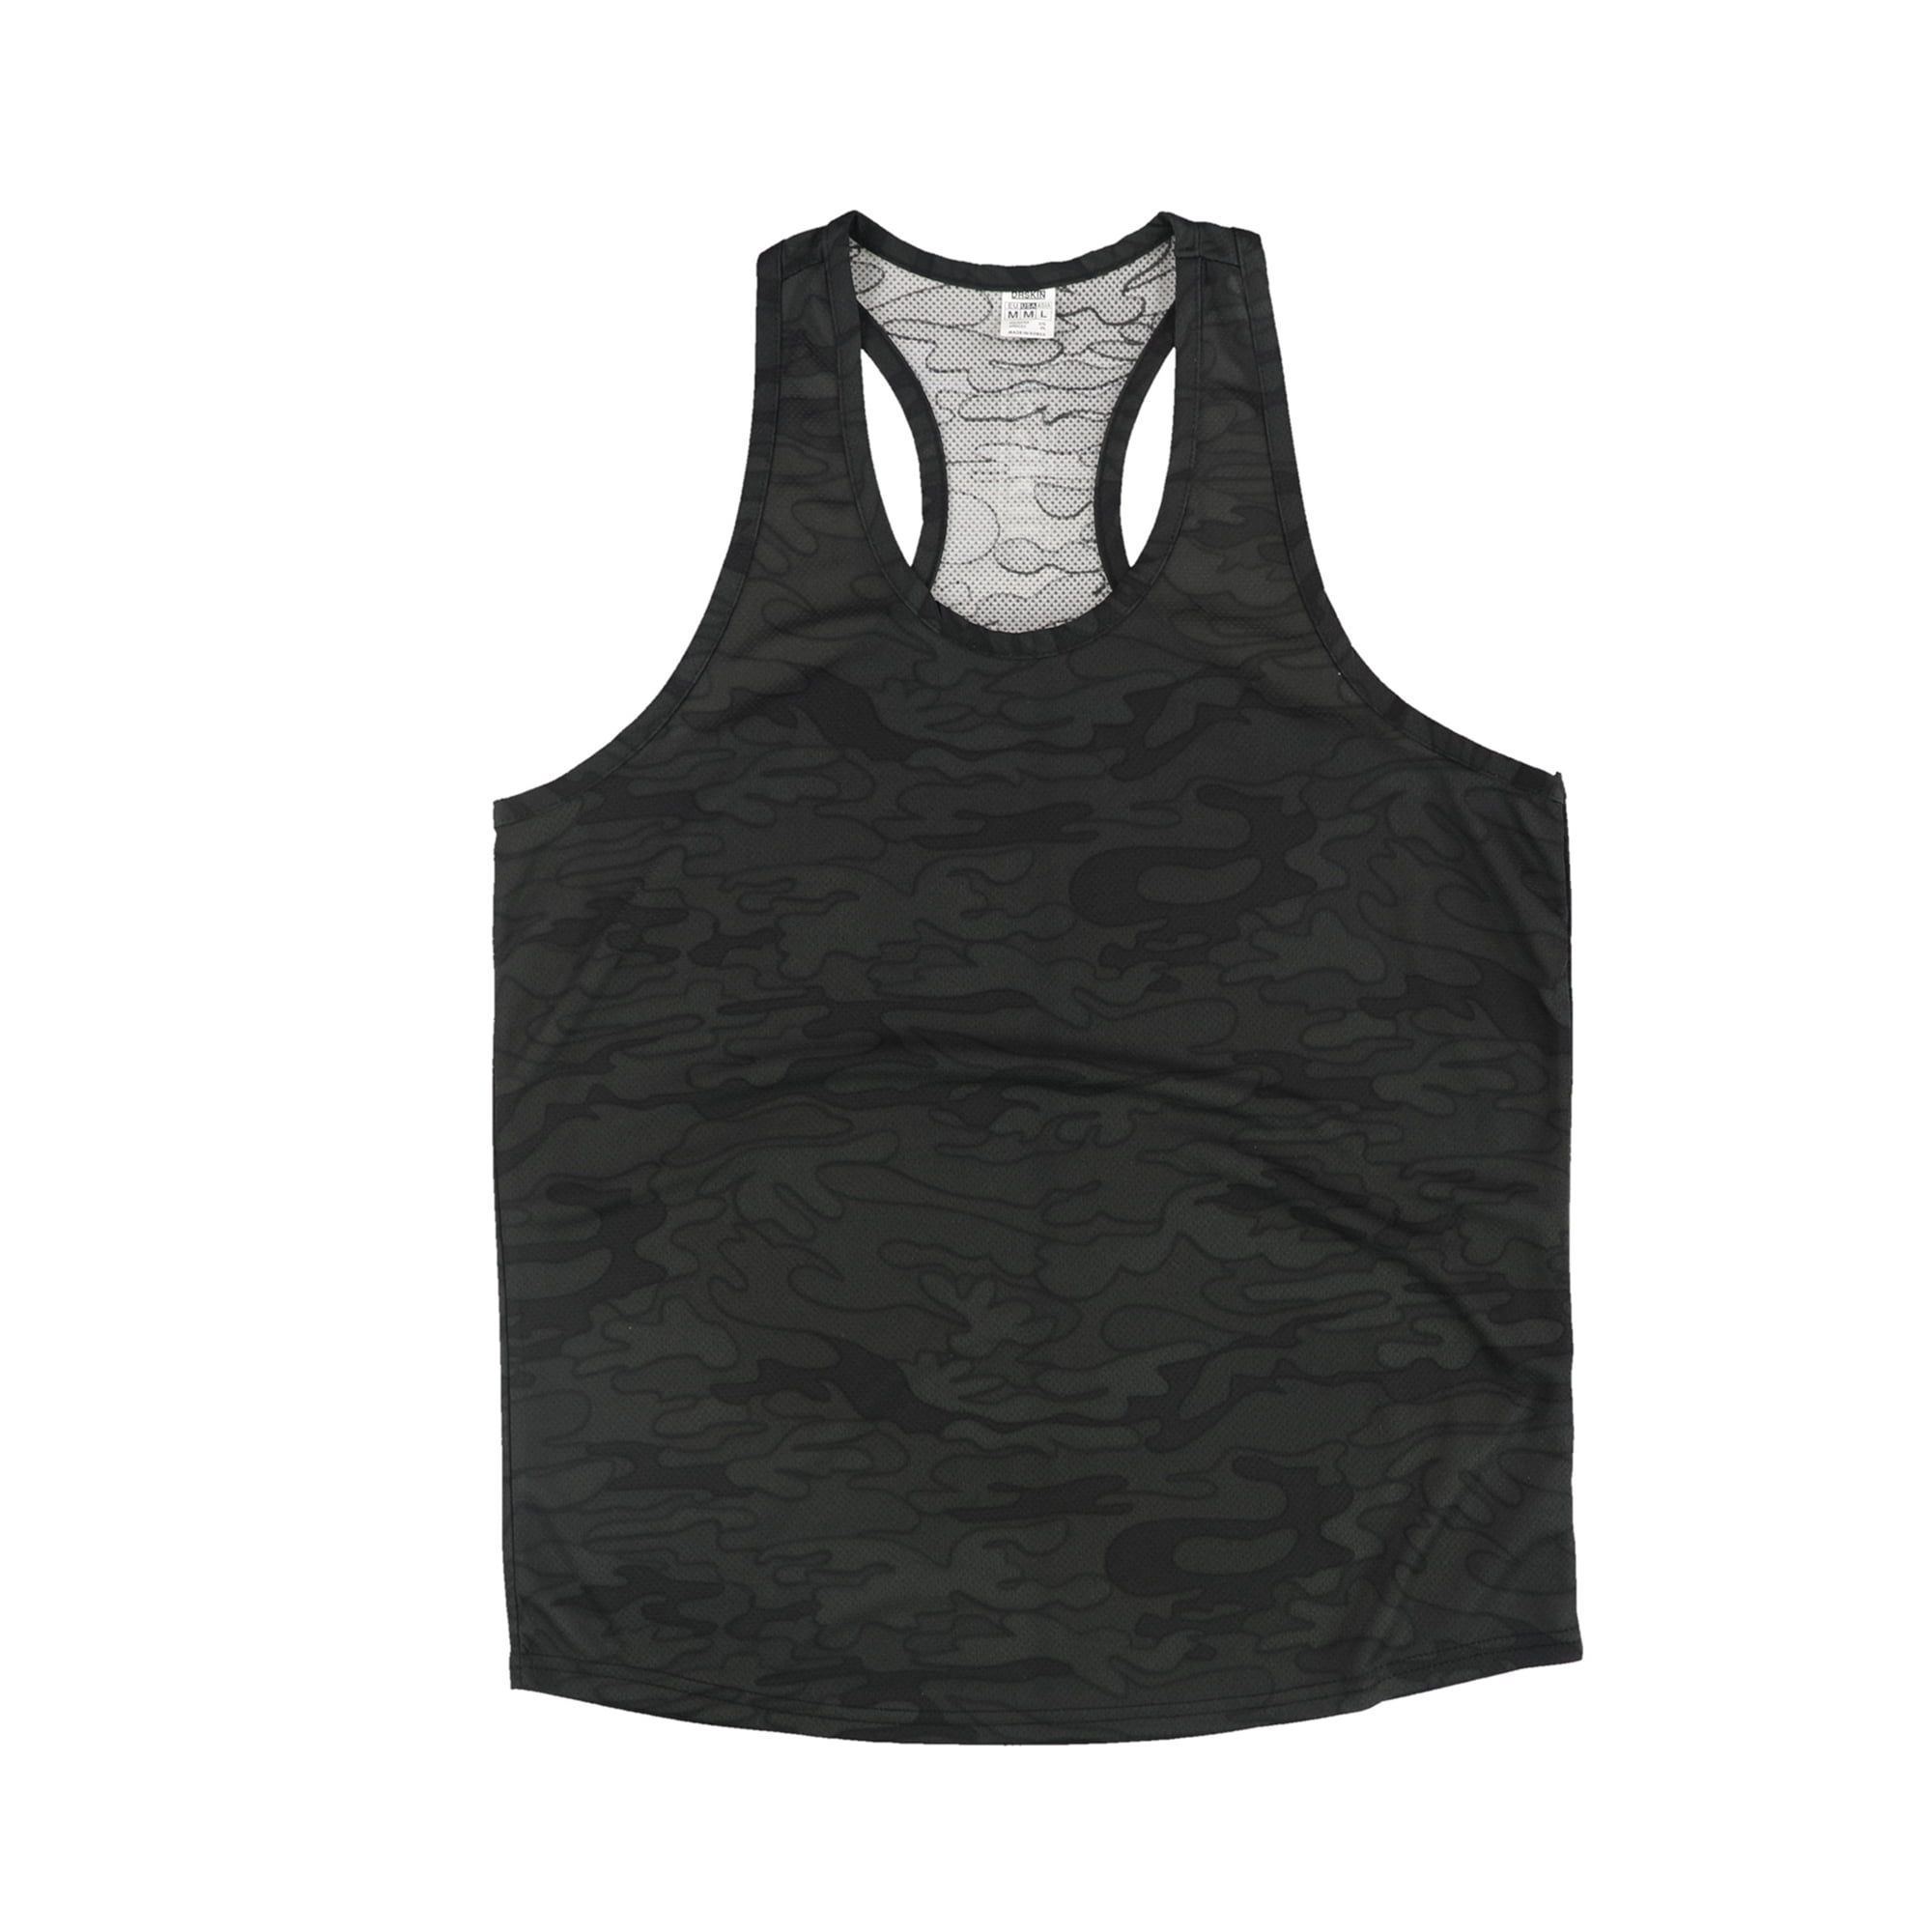 DRSKIN Mens Cool Shirt Muscle Tank Top, Black, Medium - Walmart.com